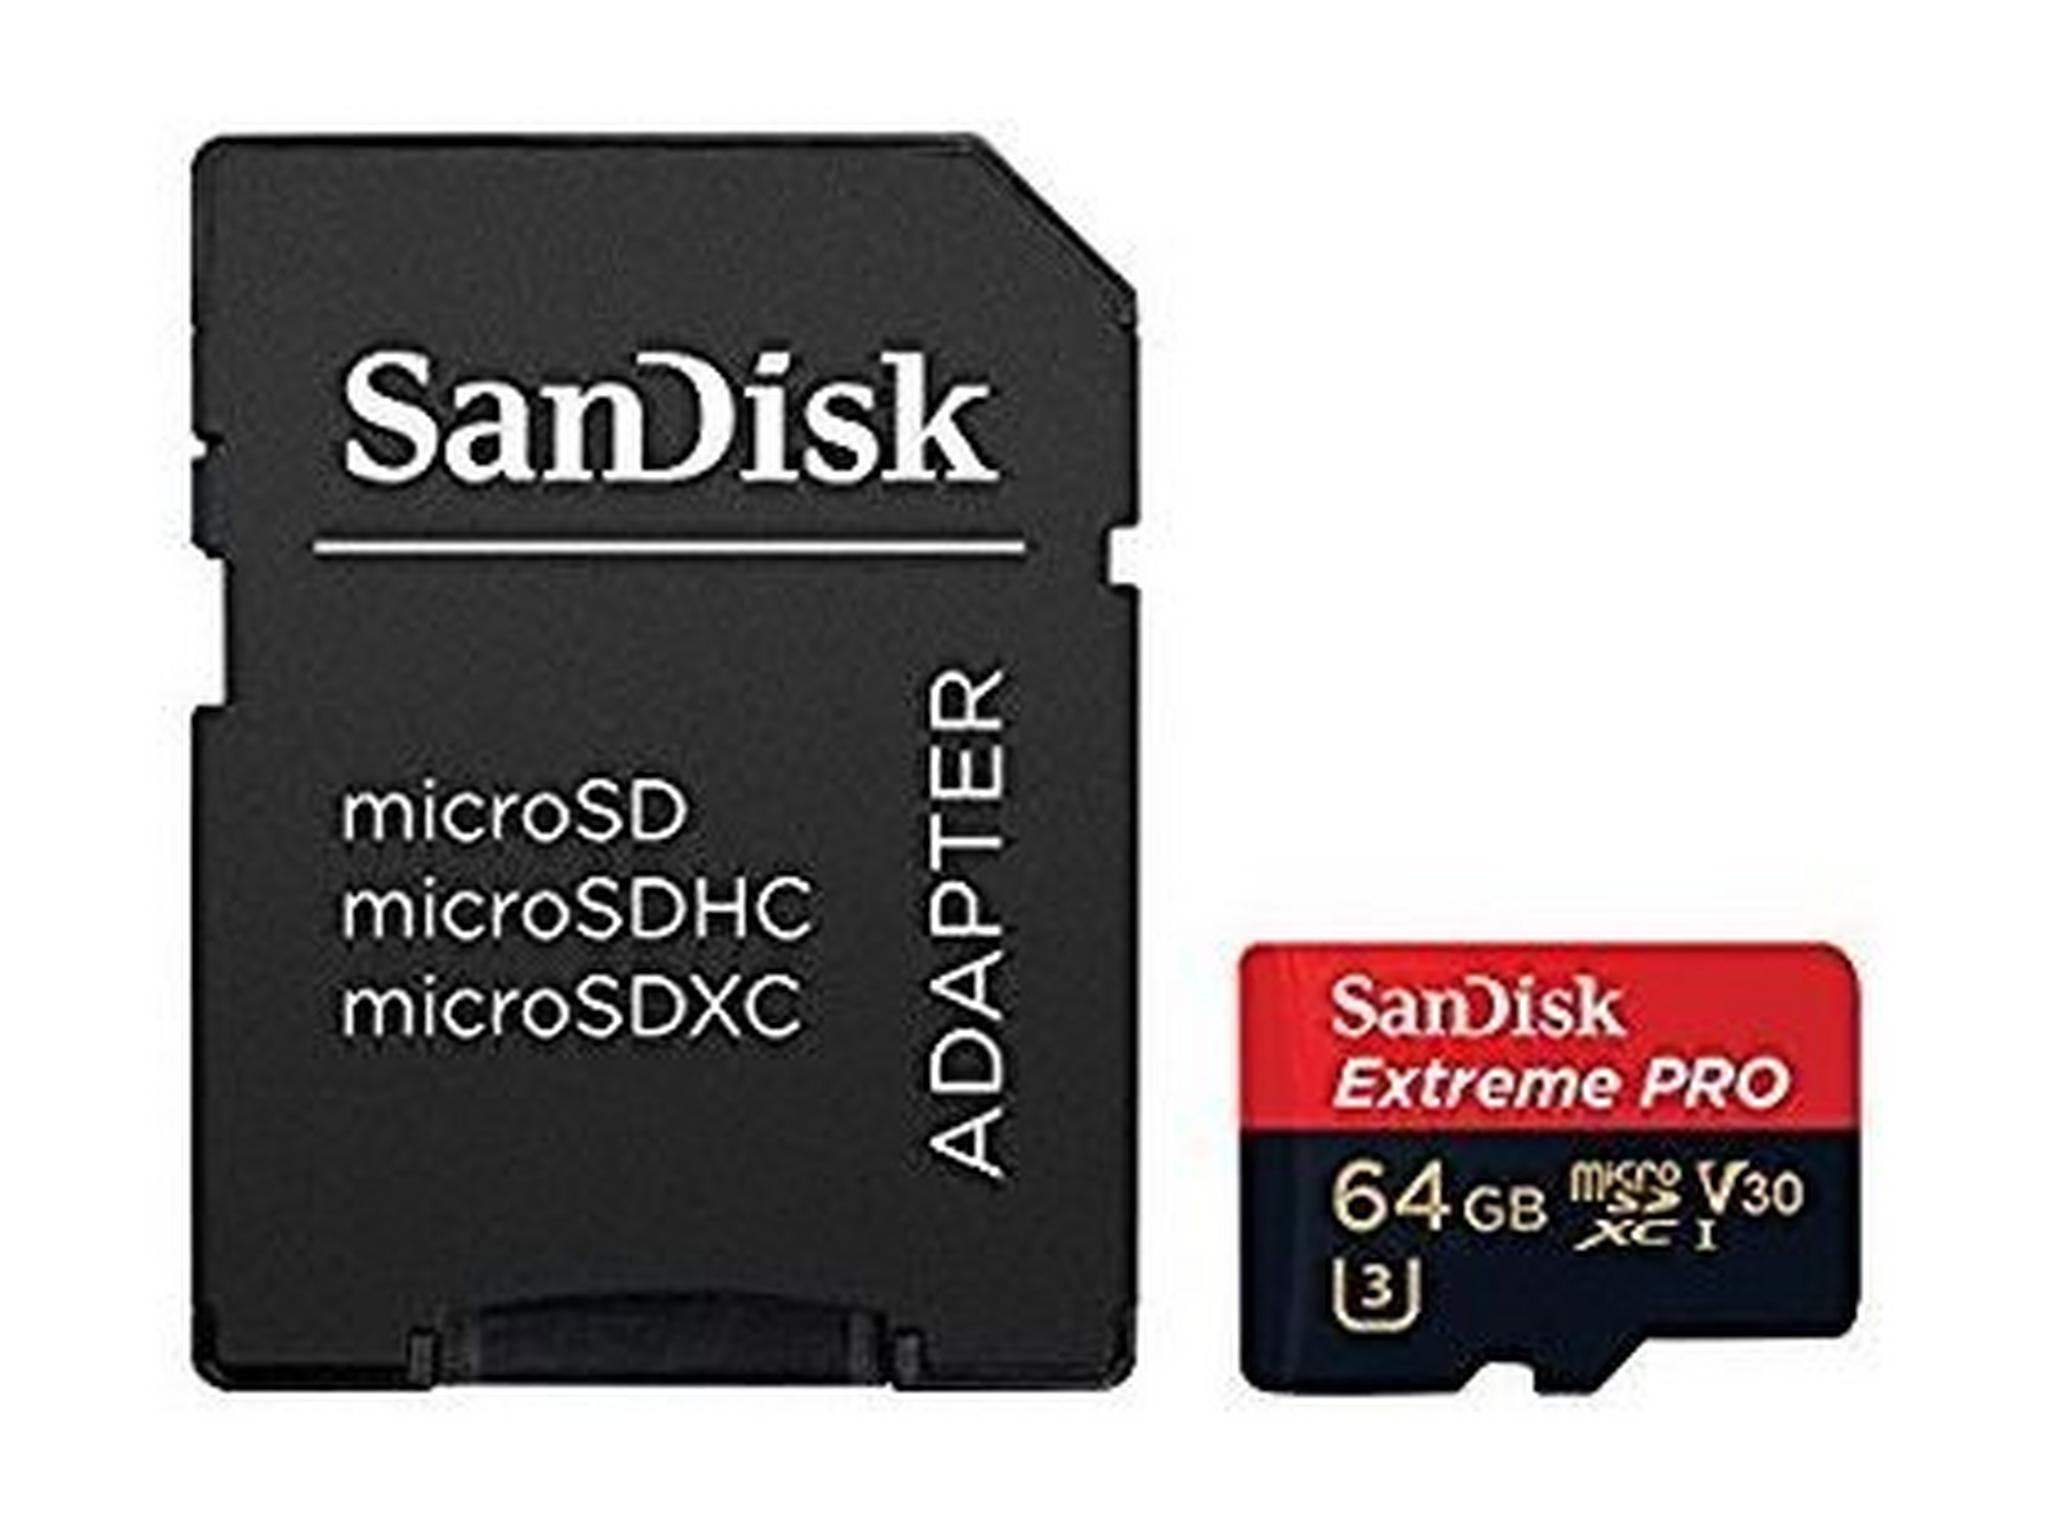 Sandisk Extreme Pro 64GB 4K UHS-I Micro SDXC 95MB/S Memory Card